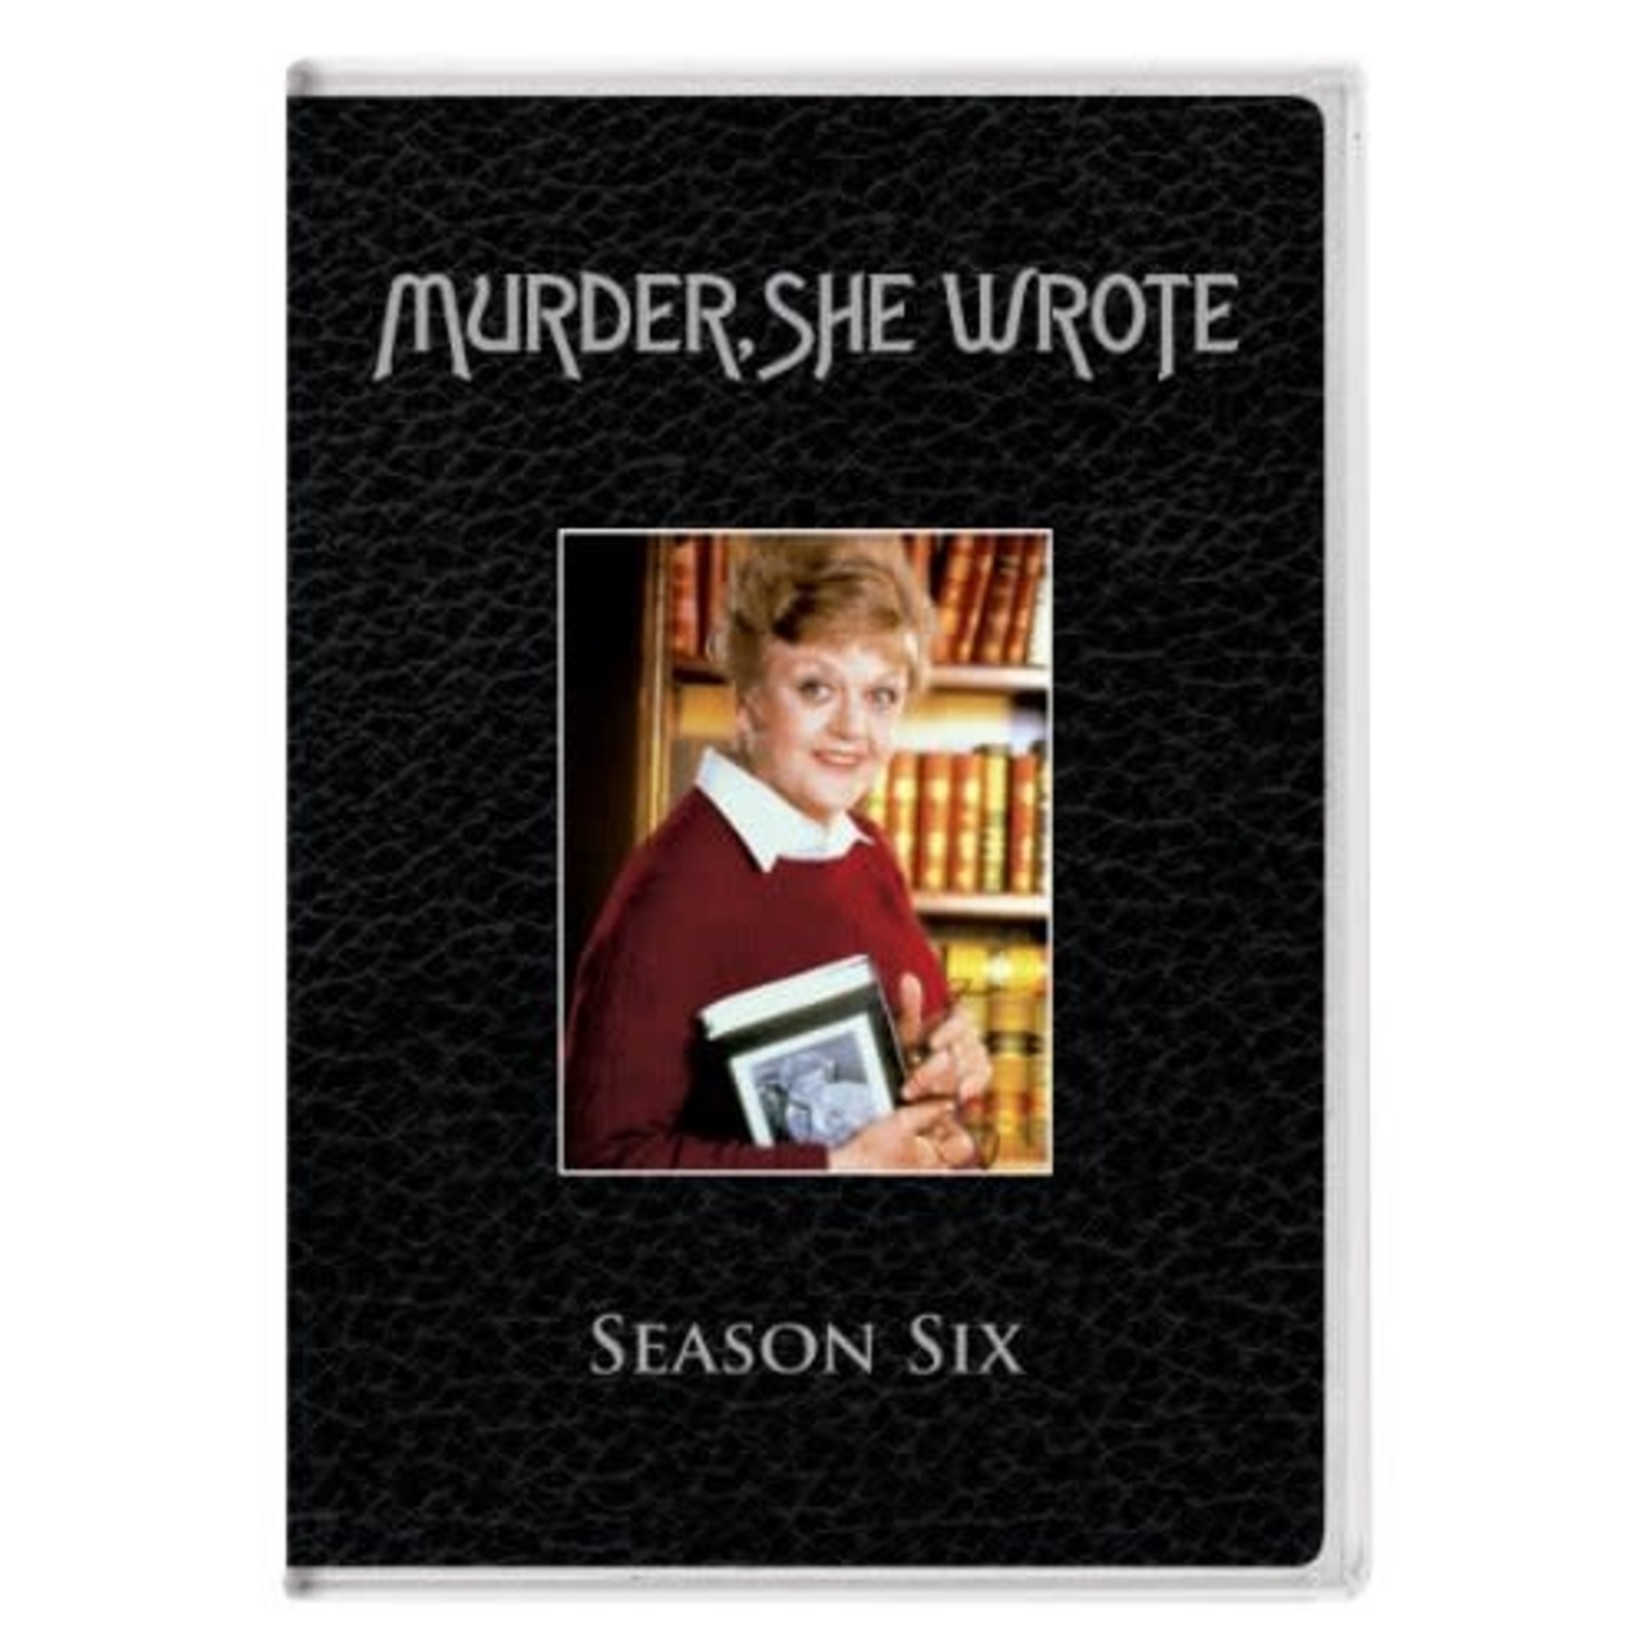 Murder, She Wrote - Season 6 [USED DVD]